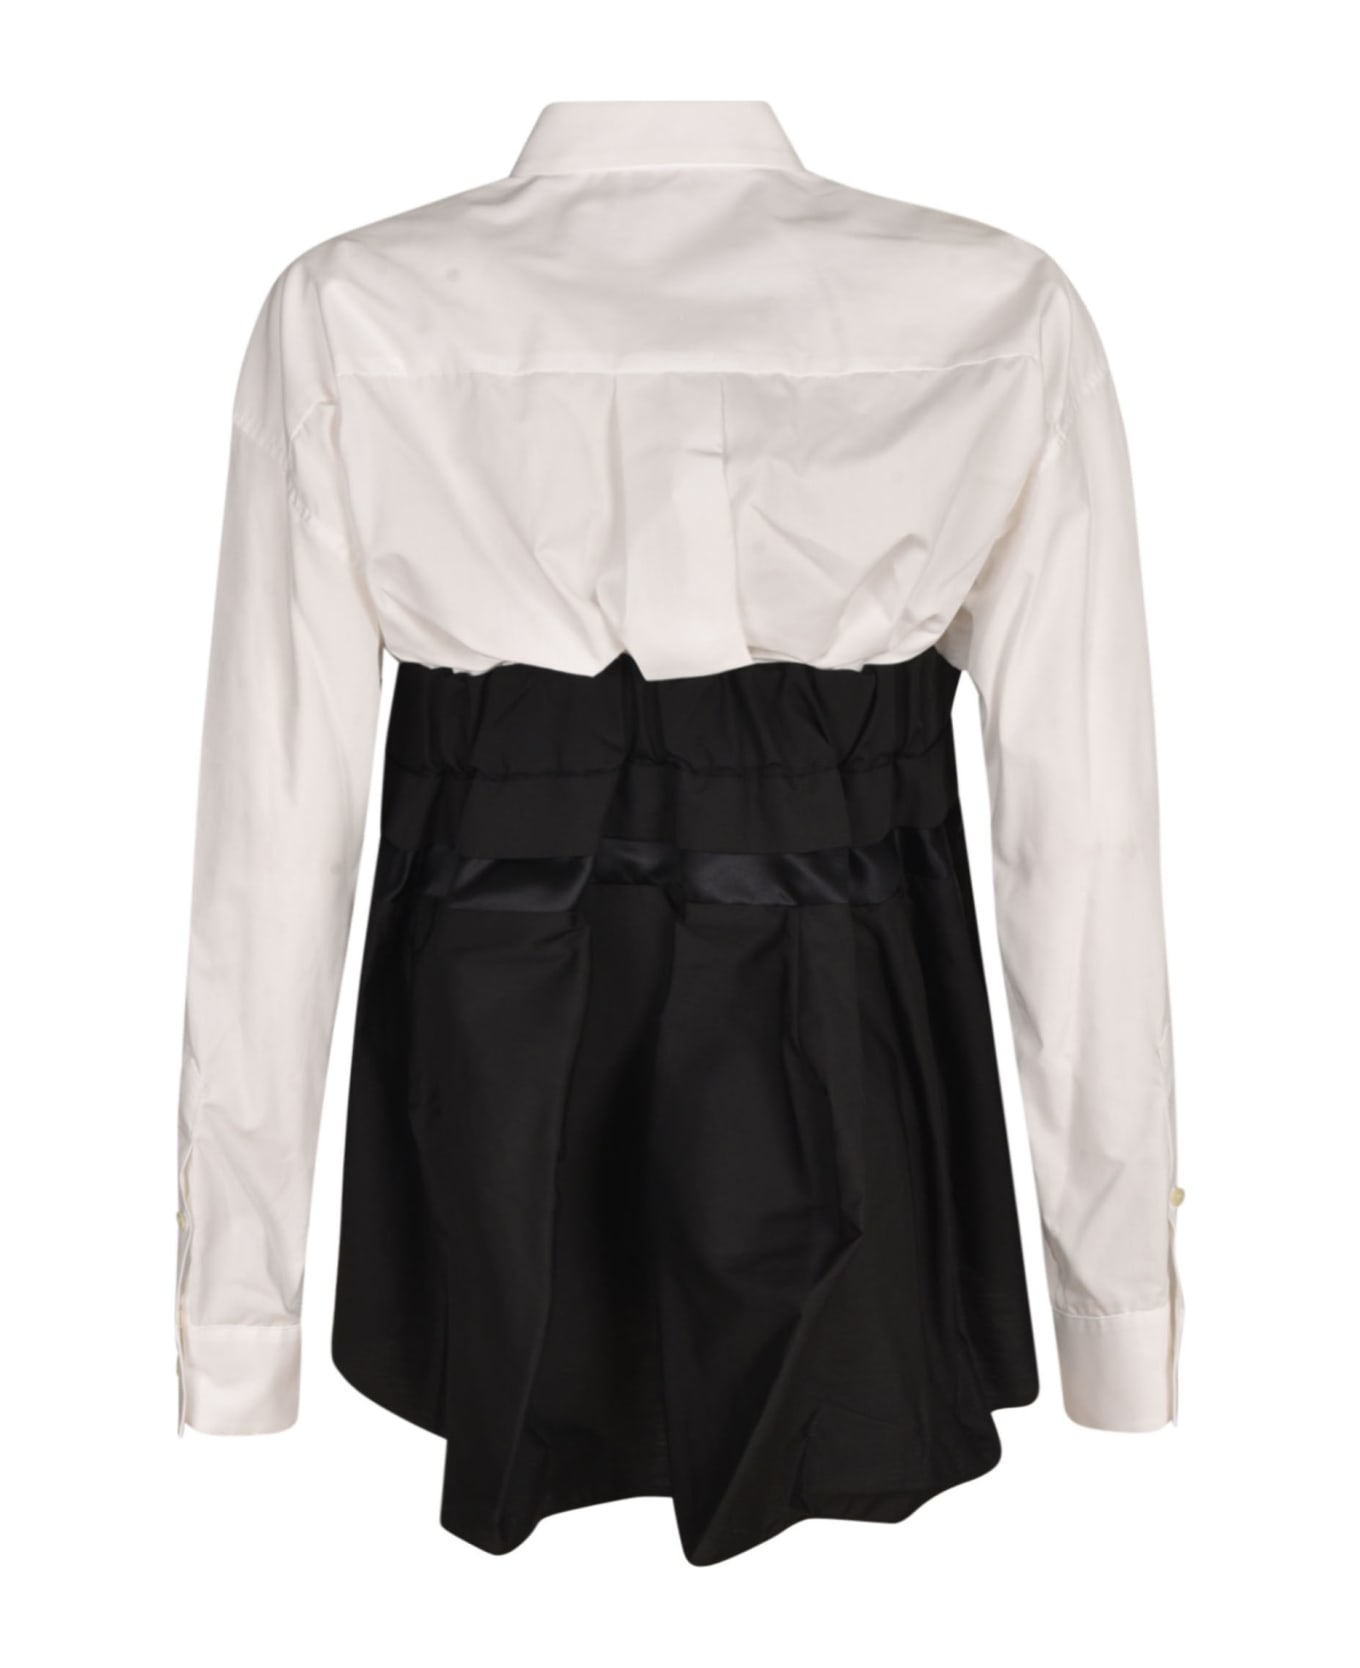 Sacai Concealed Shirt - White/Black シャツ